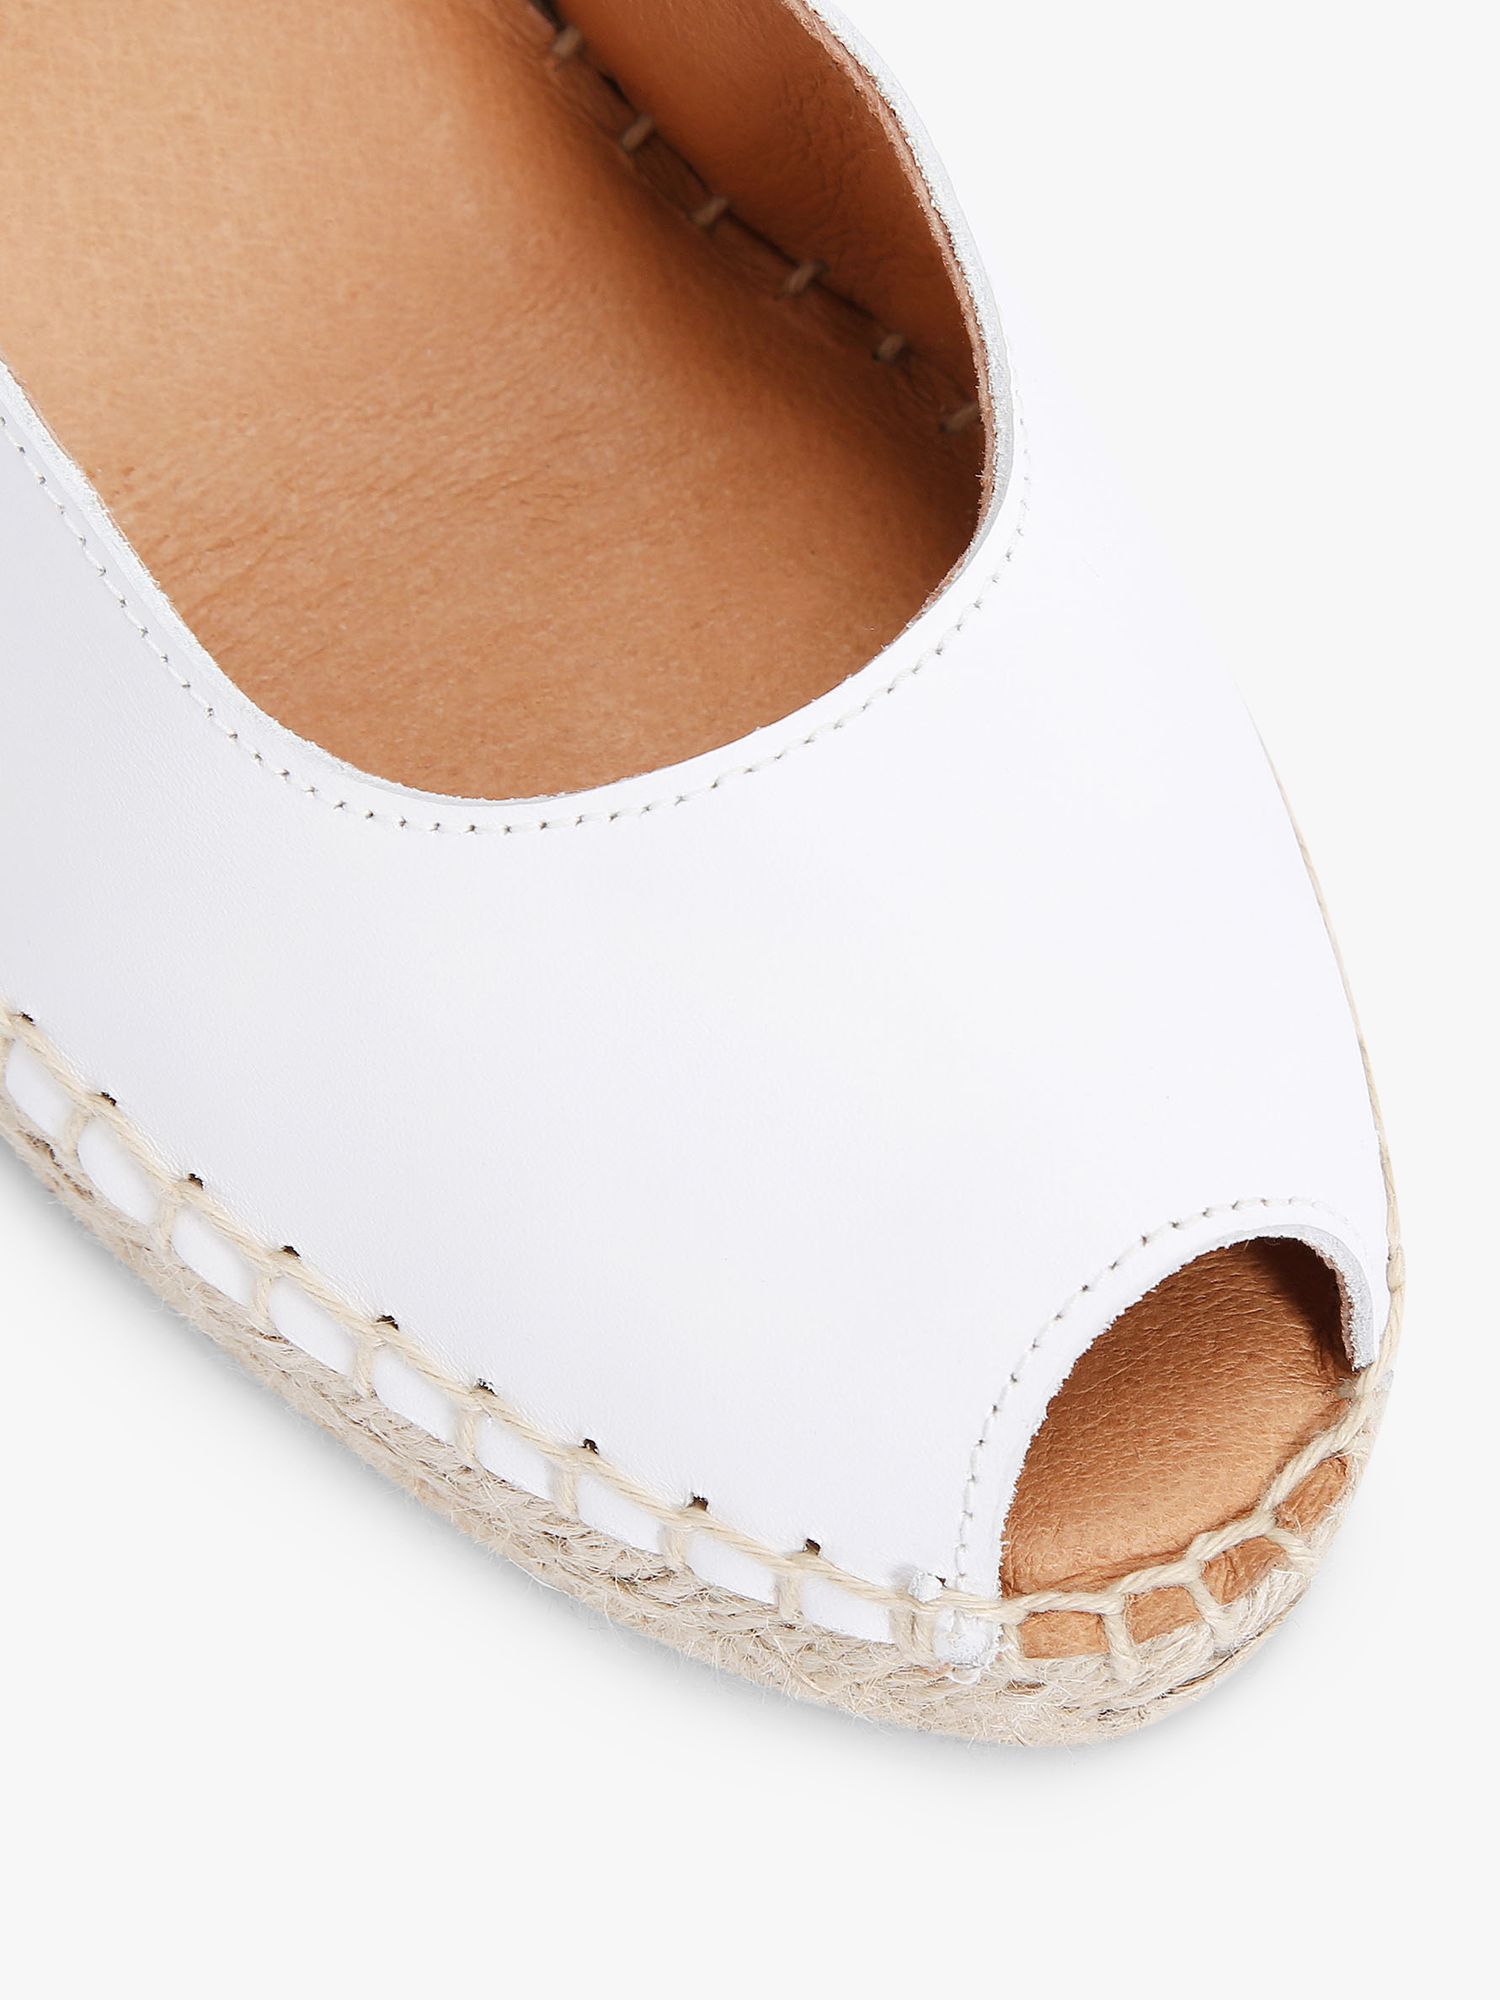 Carvela Sharon Espadrille Wedge Sandals, White, 4